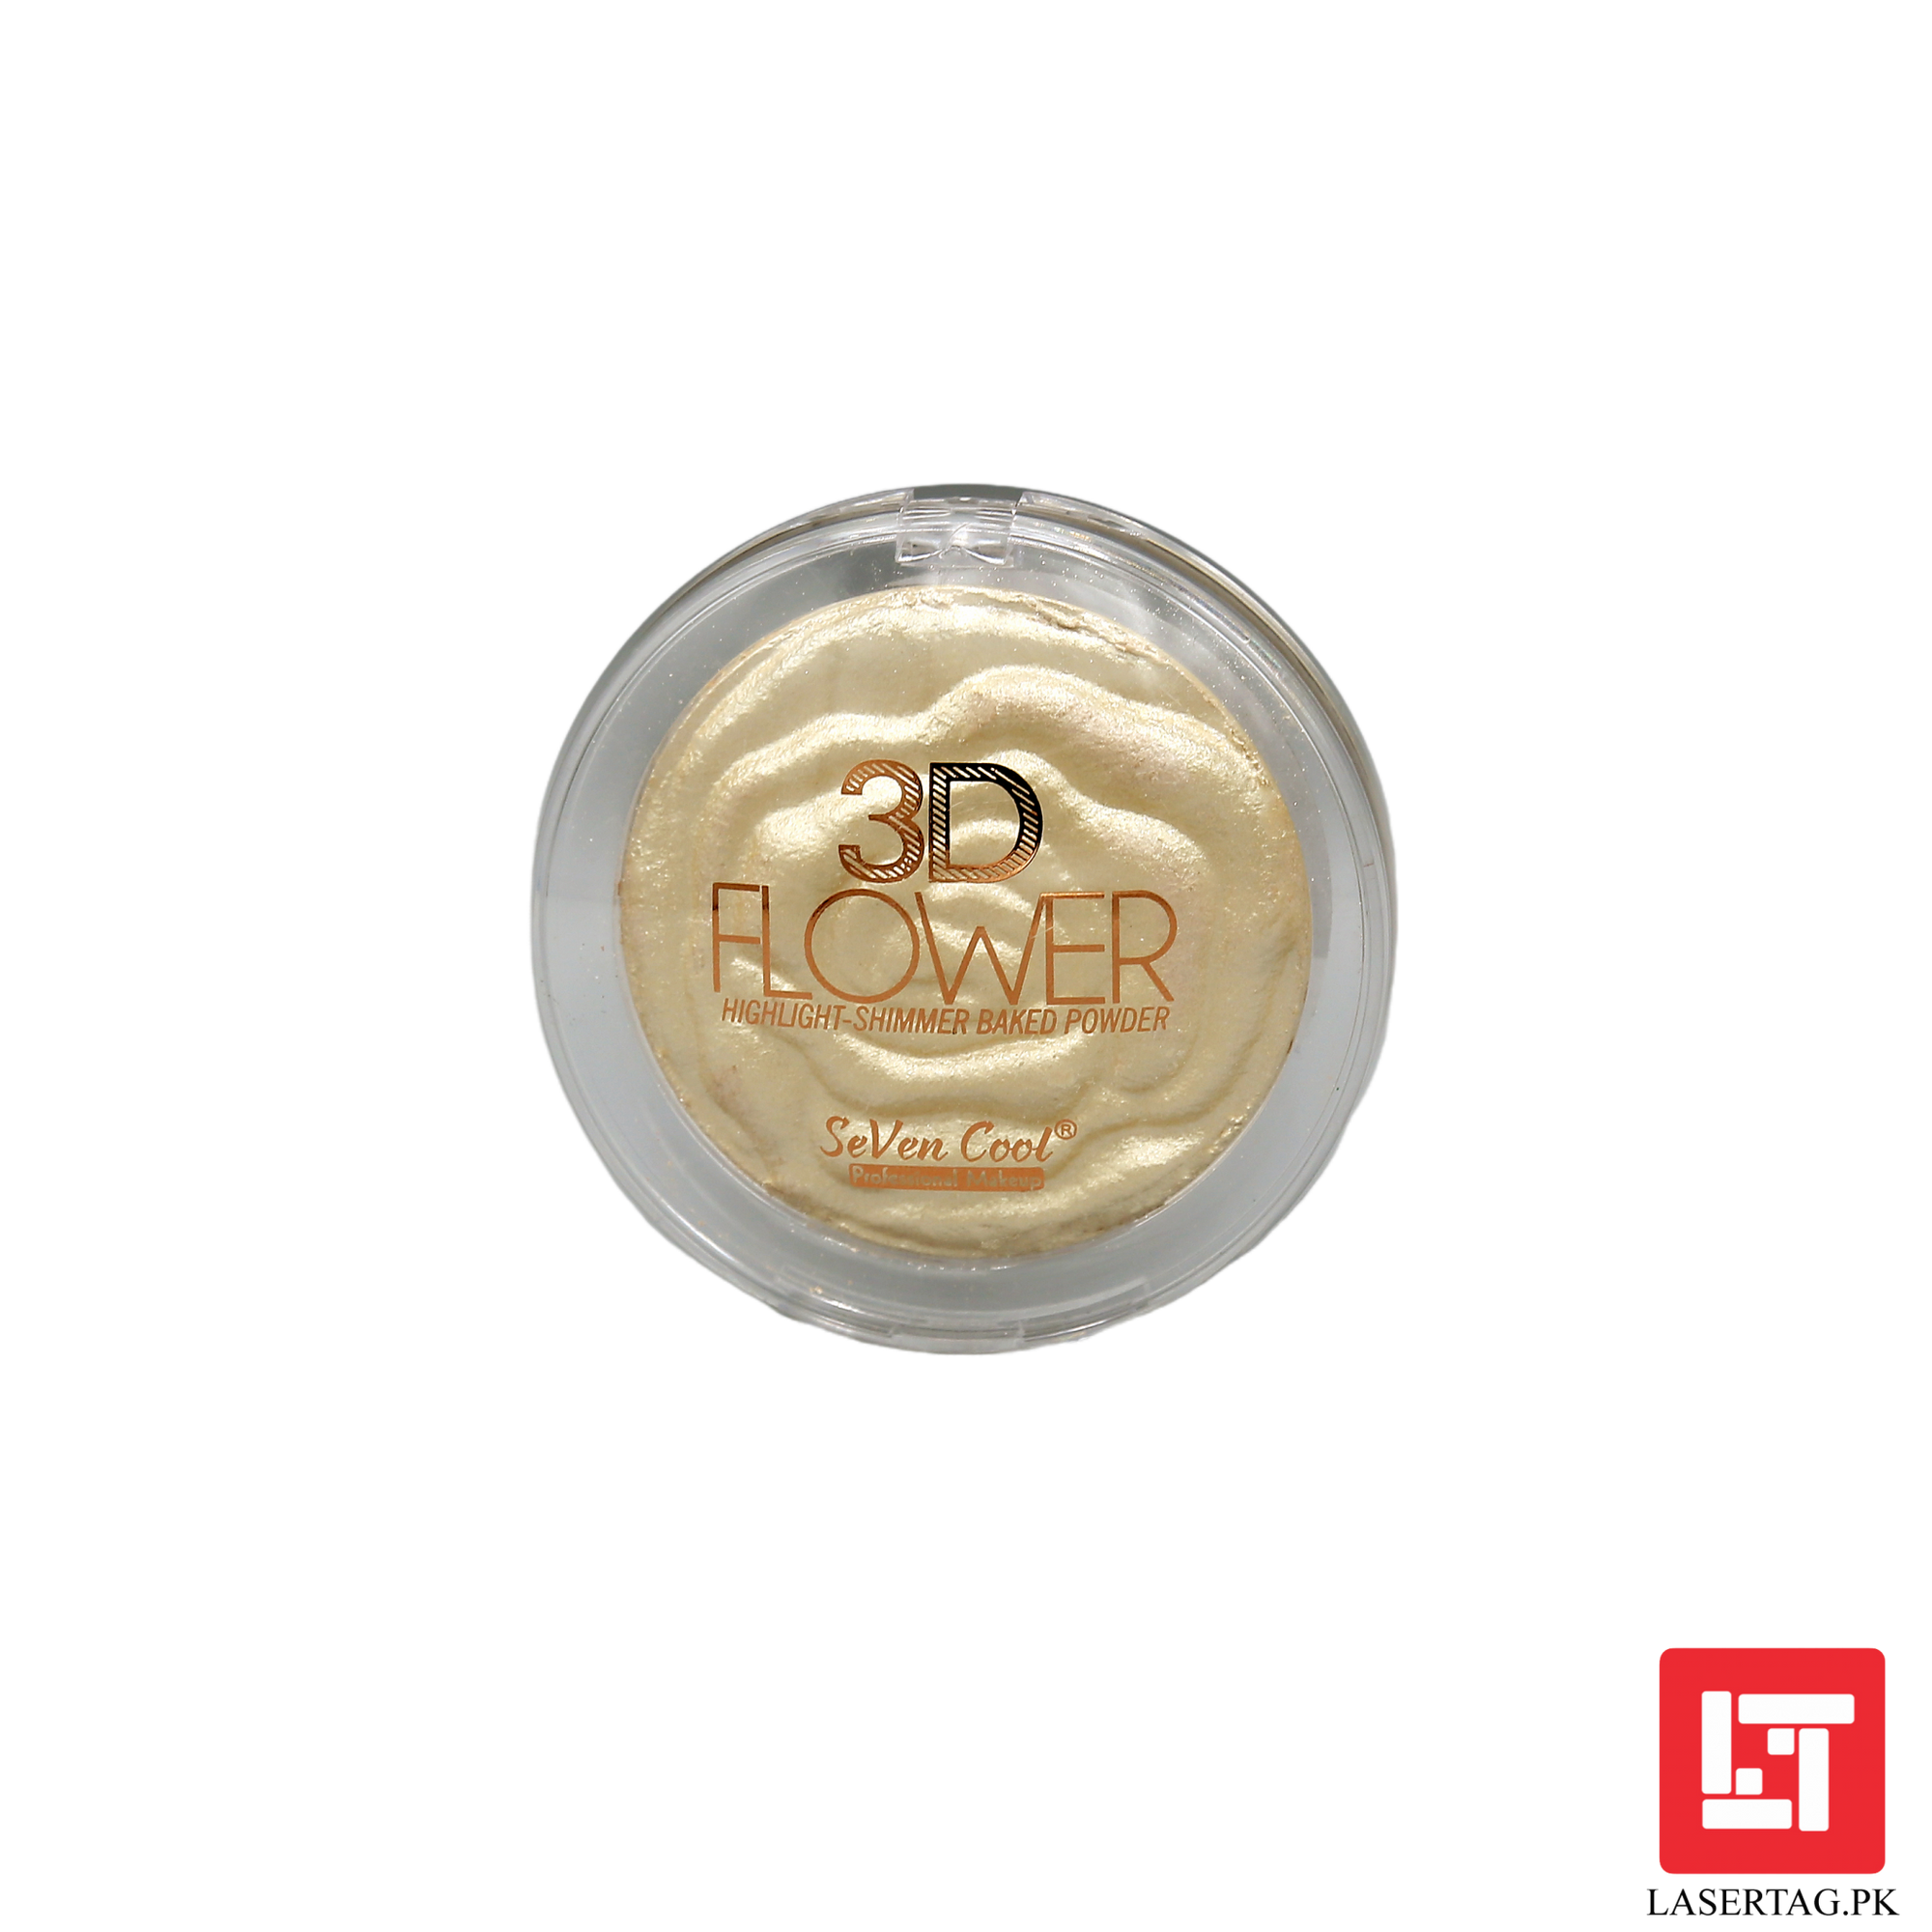 Seven Cool 3D Flower Highlighter Shimmer Baked Powder Shade#2 freeshipping - lasertag.pk